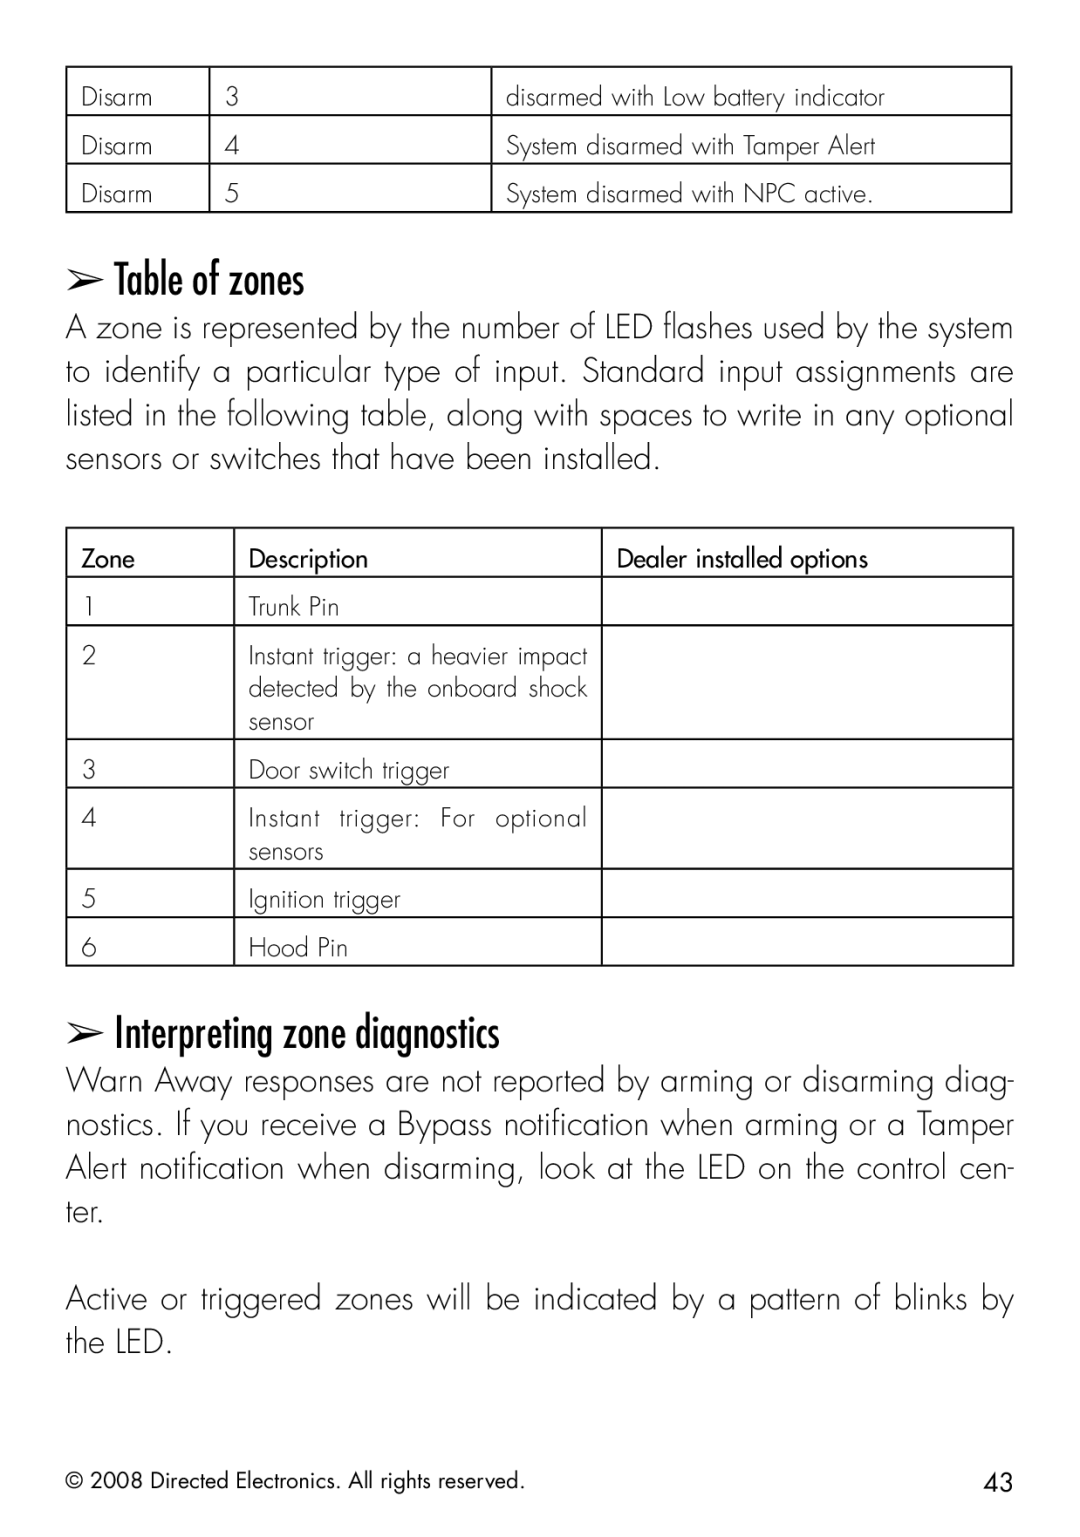 Clifford 50.7X manual Table of zones, Interpreting zone diagnostics 